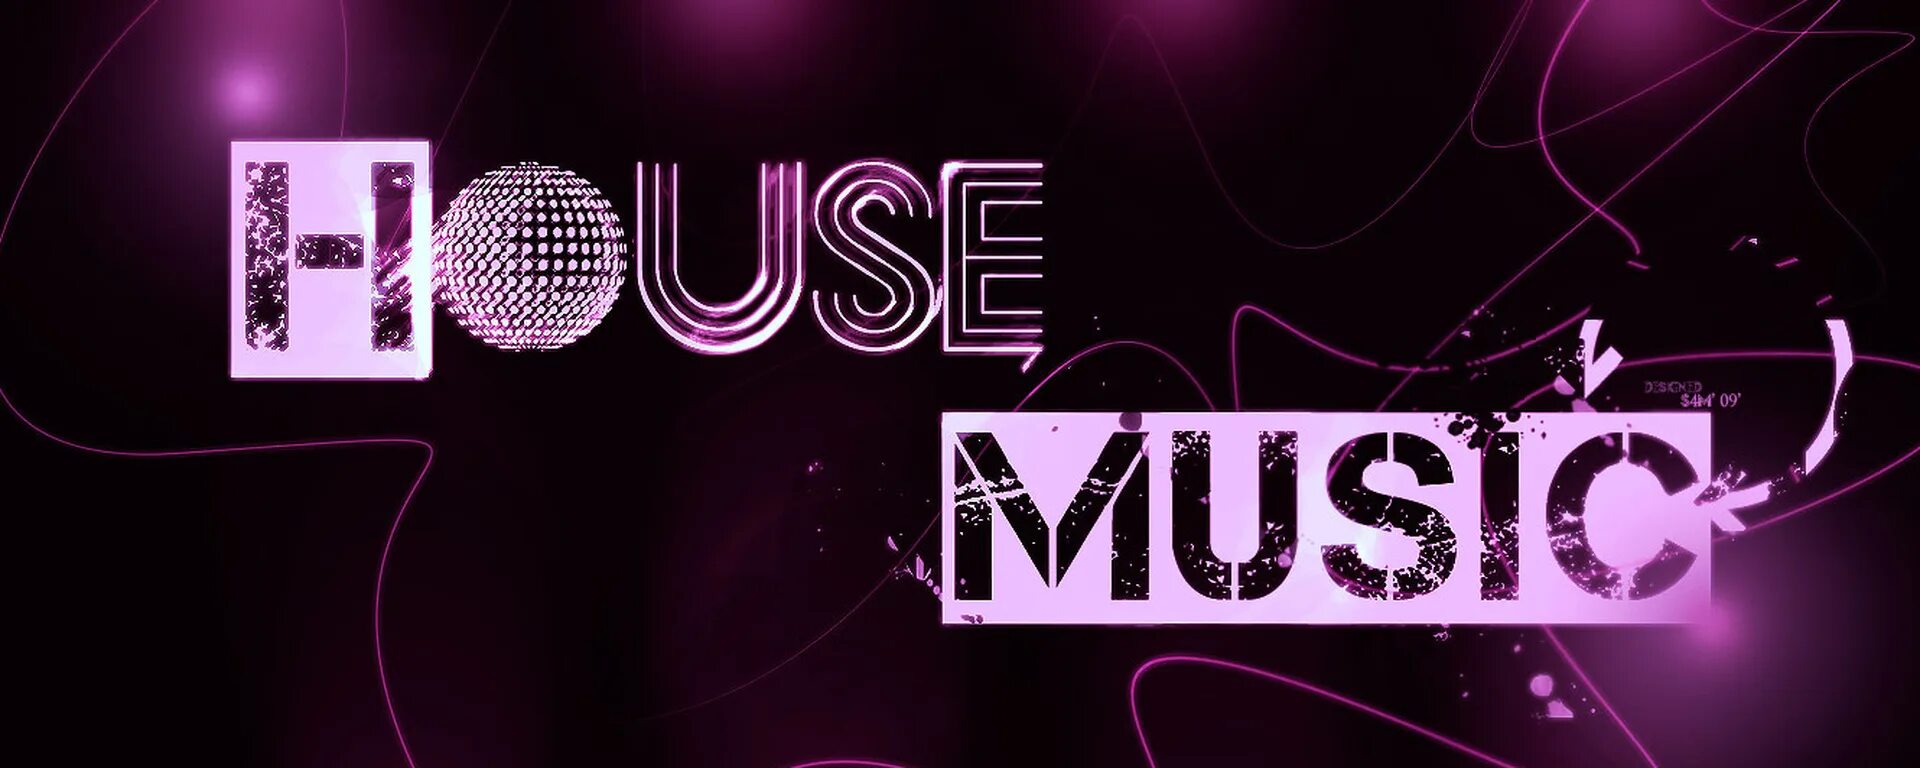 Хаус Мьюзик. House Music картинки. Хаус стиль музыки. House Music обложка. House music mp3